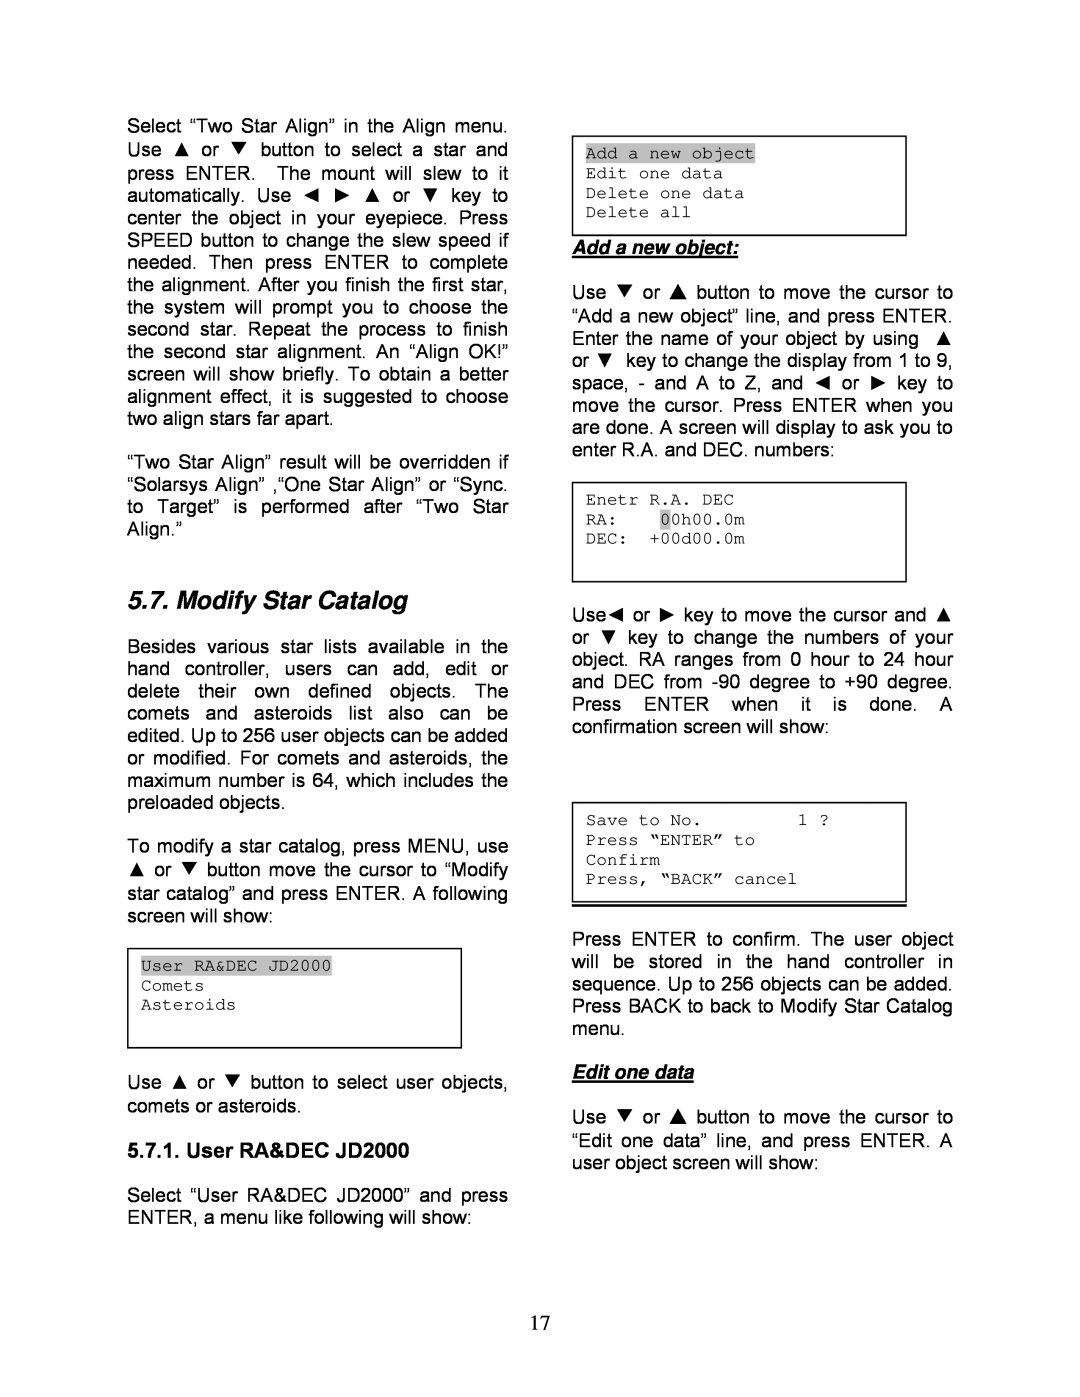 iOptron 8405 instruction manual Modify Star Catalog, User RA&DEC JD2000 